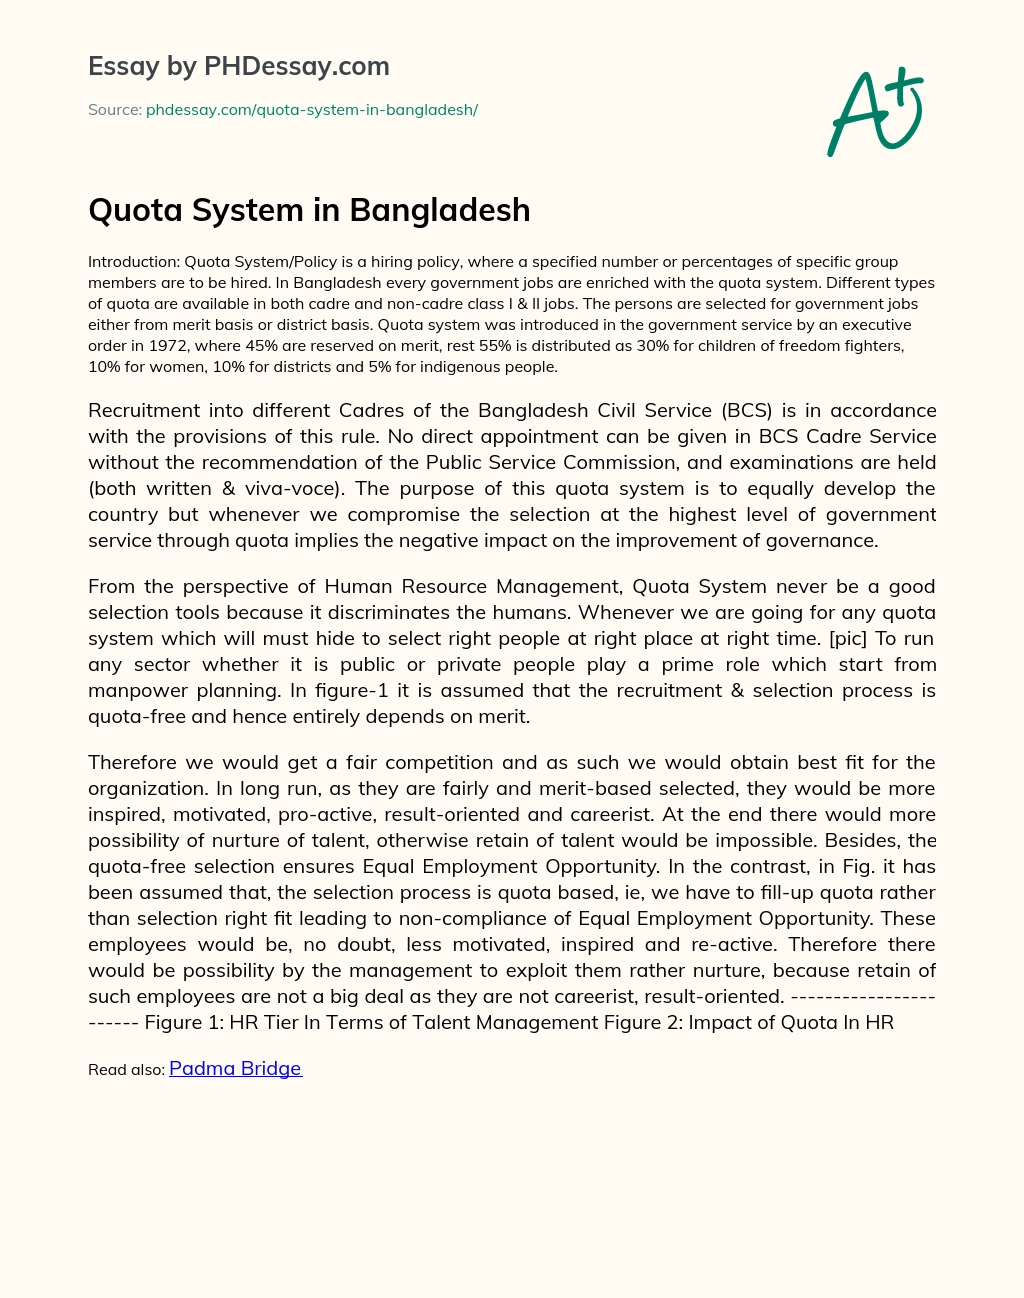 Quota System in Bangladesh essay